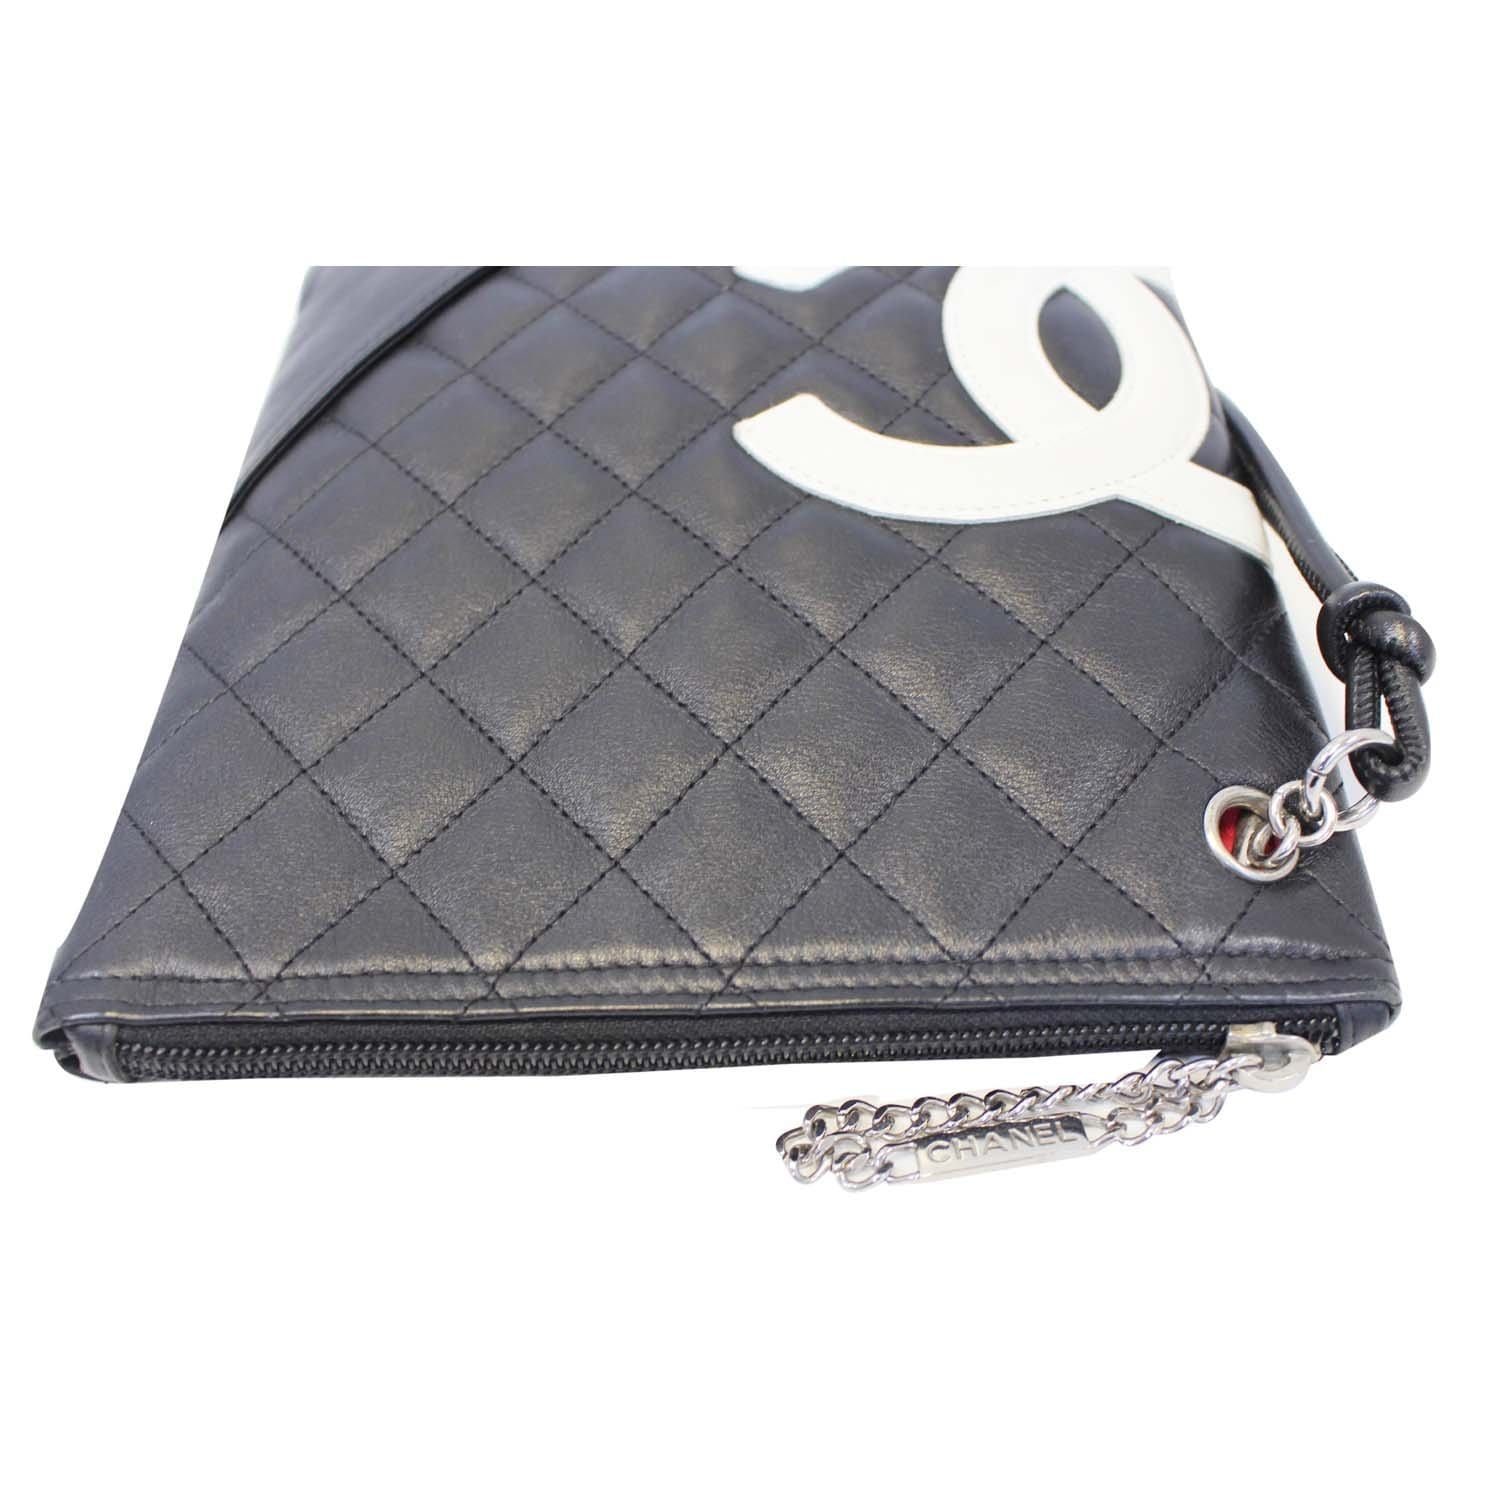 Chanel Black Cambon CC Duffle Satchel Shoulder Bag